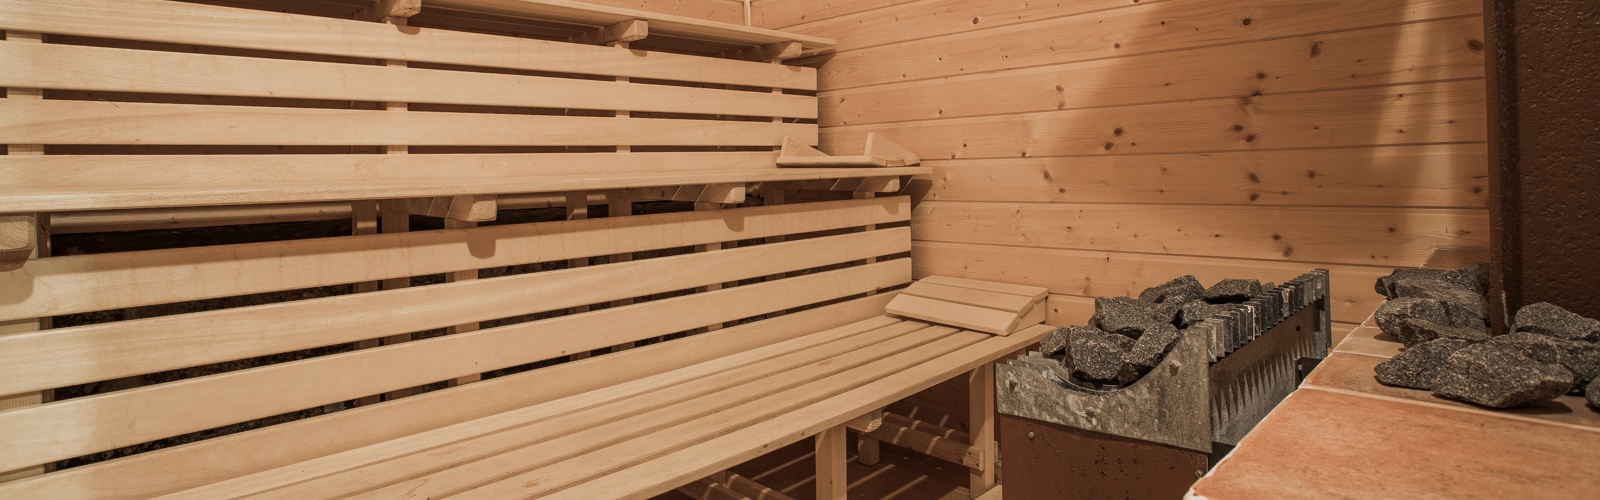 Penzion Semerink - sauna